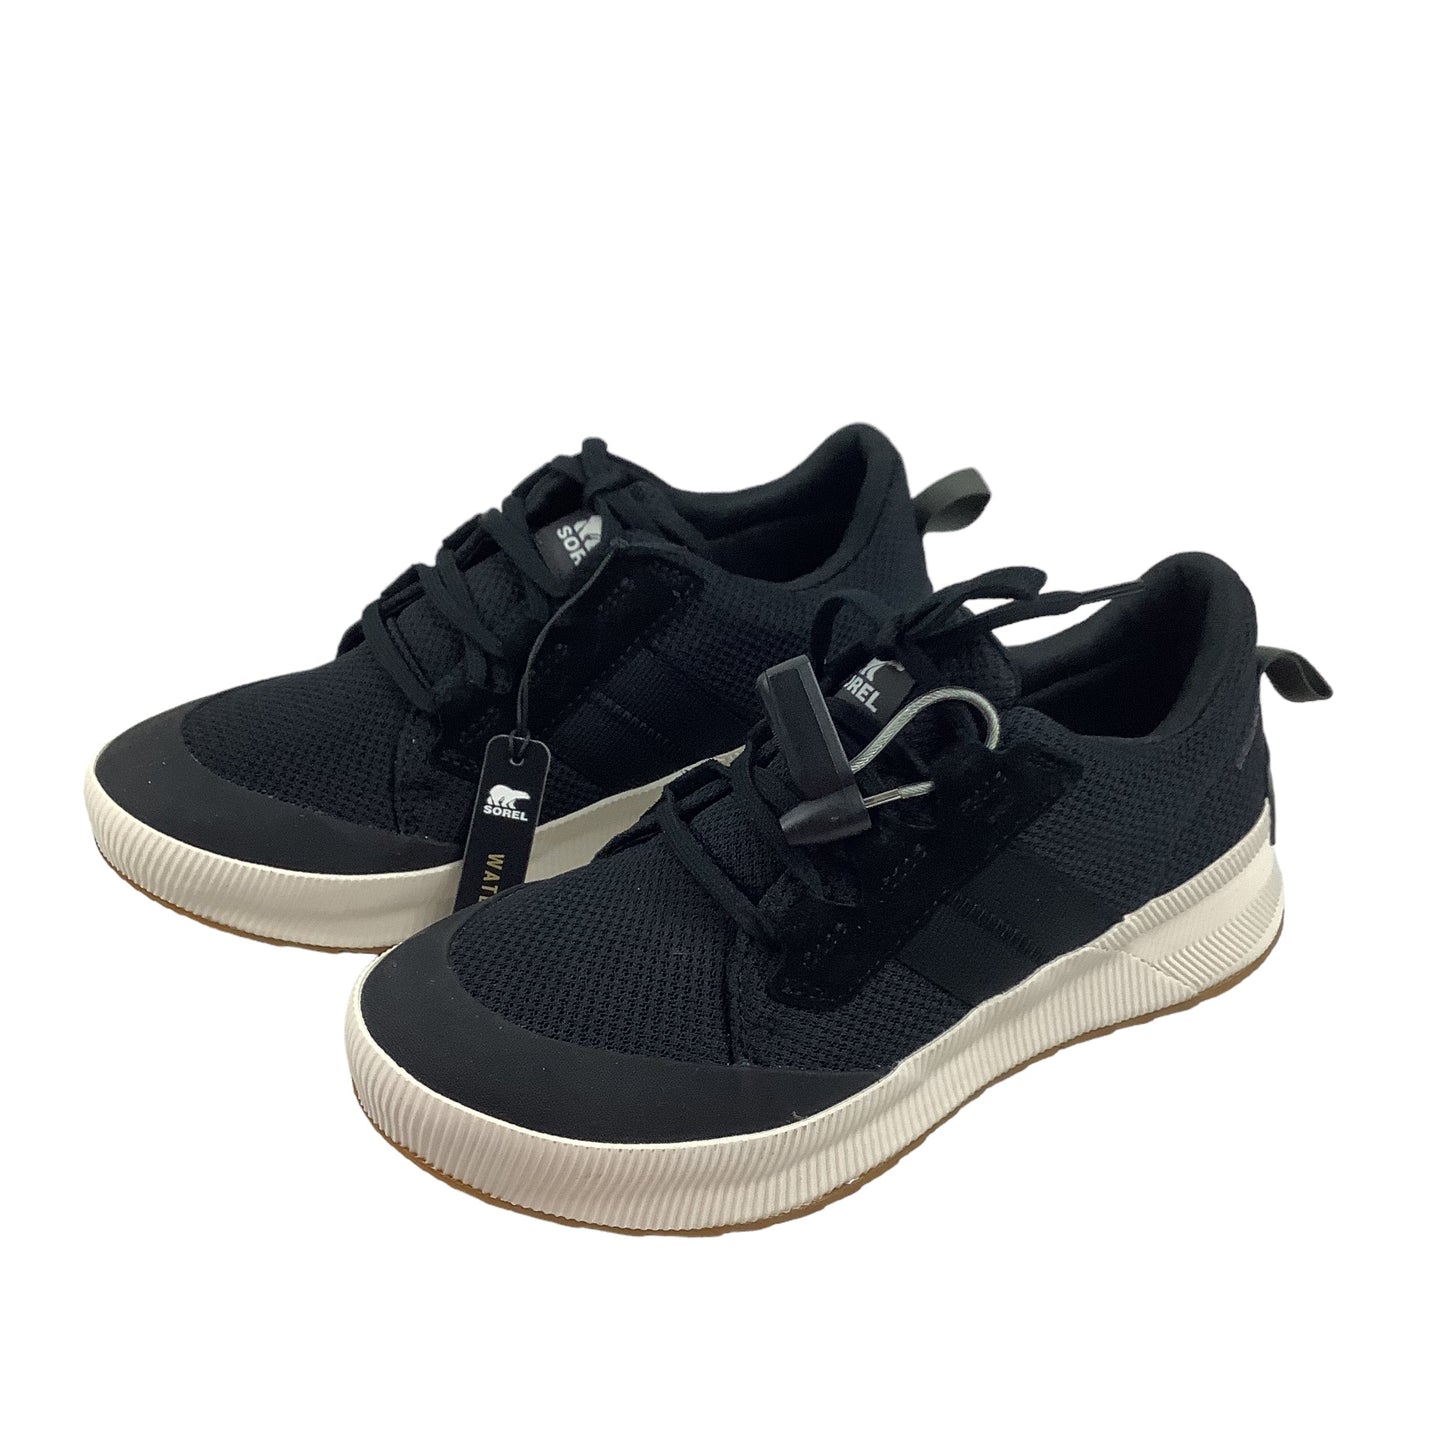 Black Shoes Athletic Sorel, Size 9.5